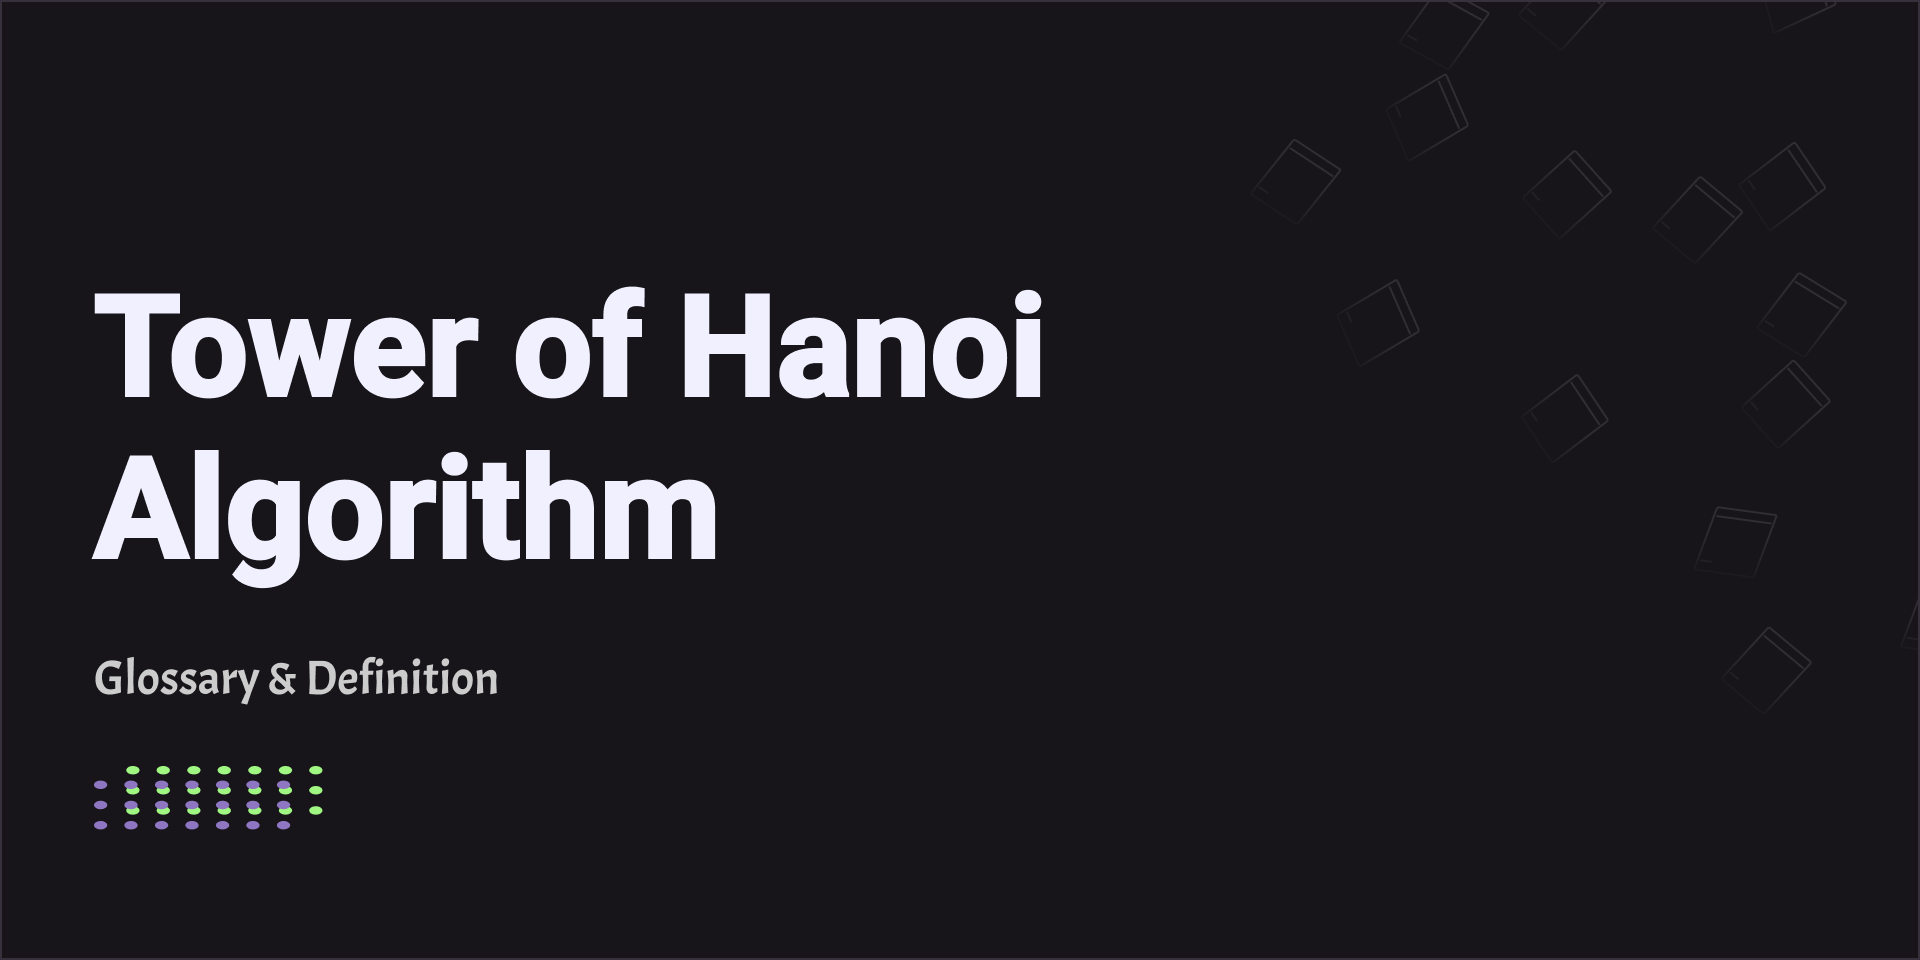 Tower of Hanoi Algorithm